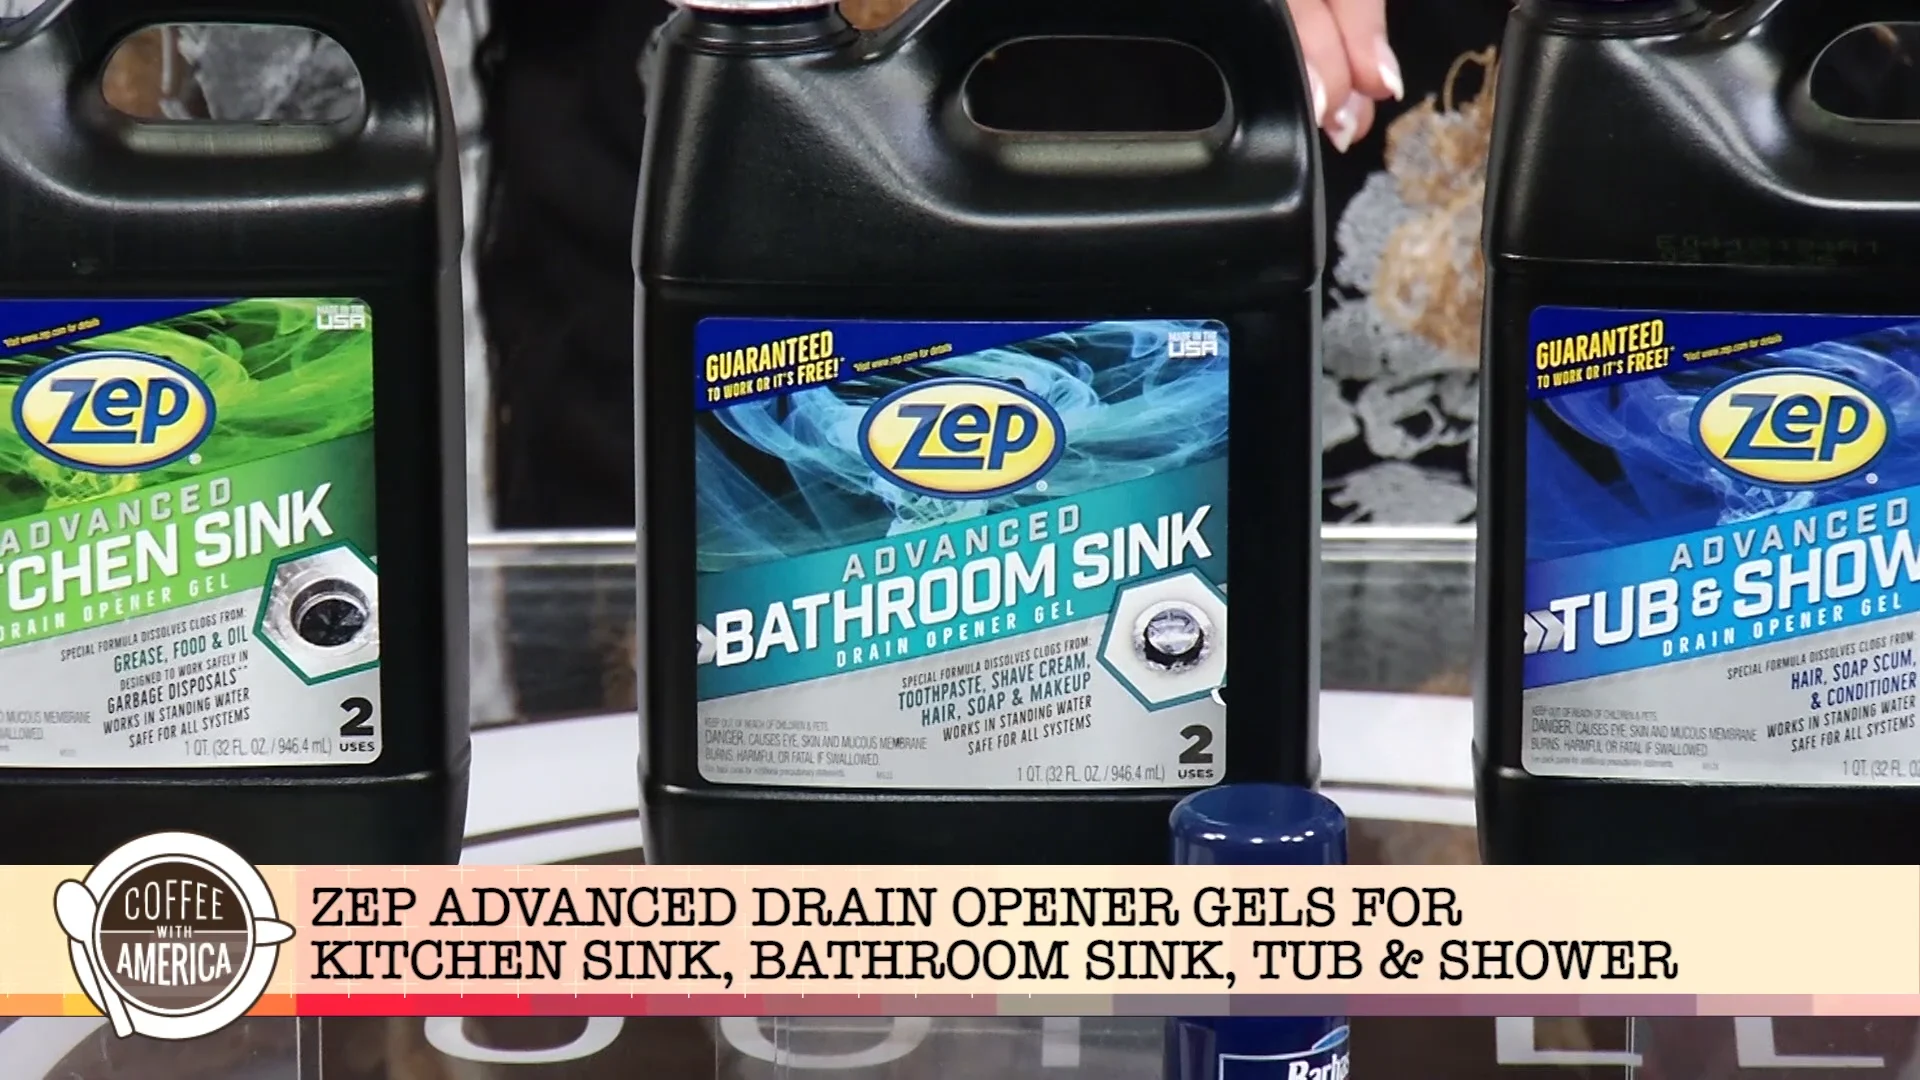 32 oz. Advanced Bathroom Sink Drain Opener